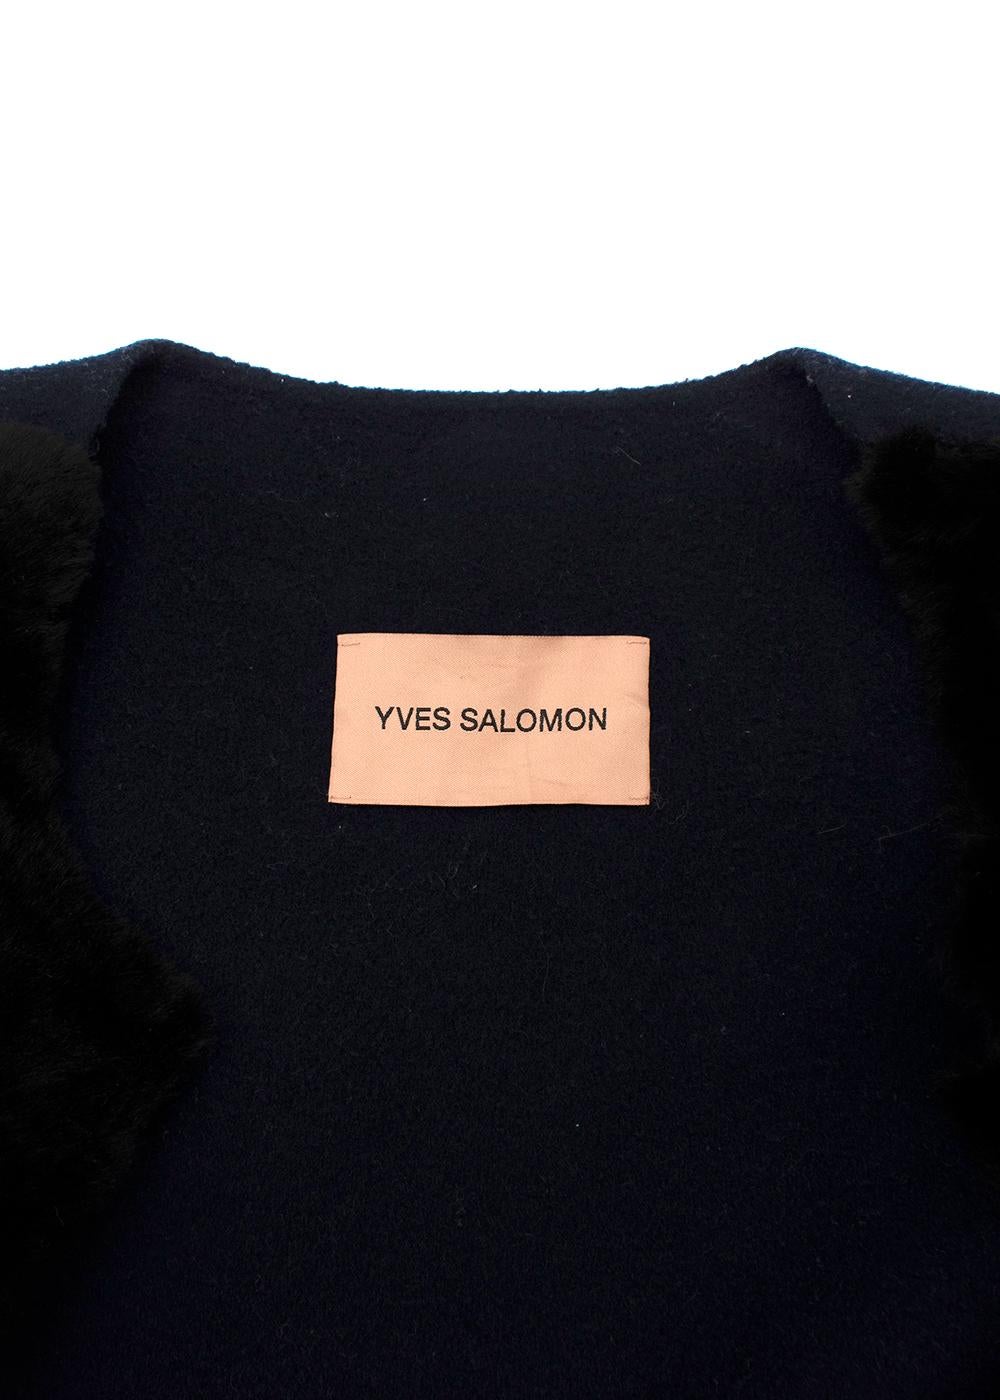 Yves Salomon Black Shearling & Navy Wool Coat US 0-2 For Sale 4